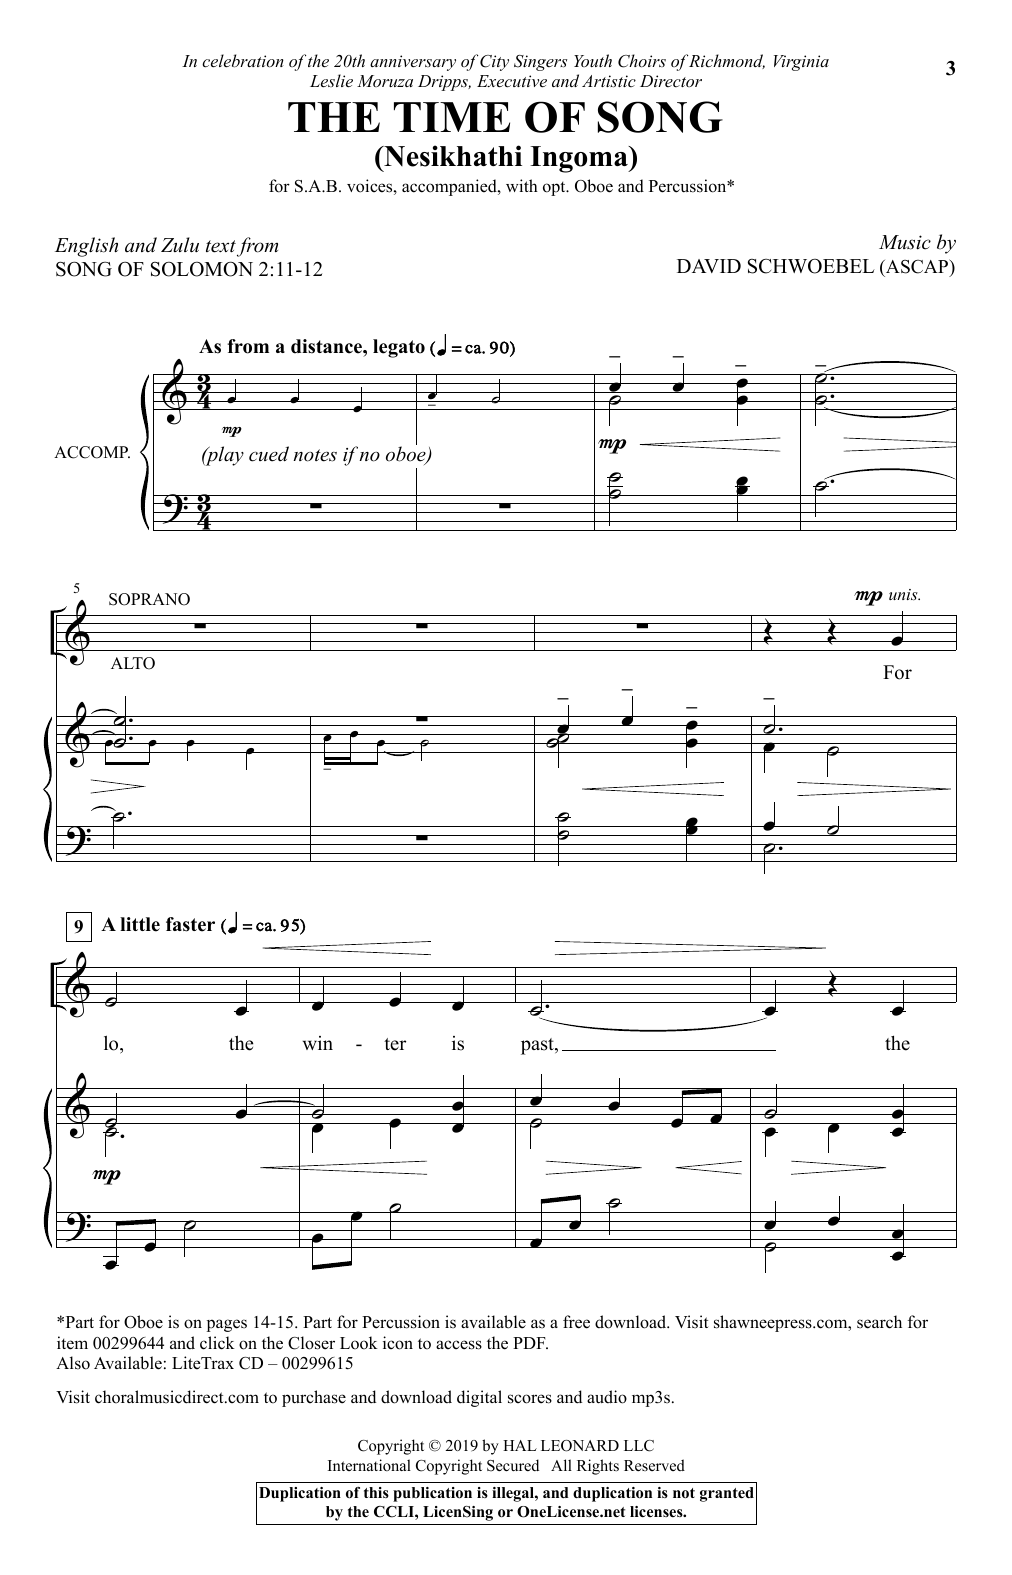 David Schwoebel The Time Of Song (Nesikhathi Ingoma) Sheet Music Notes & Chords for SAB Choir - Download or Print PDF